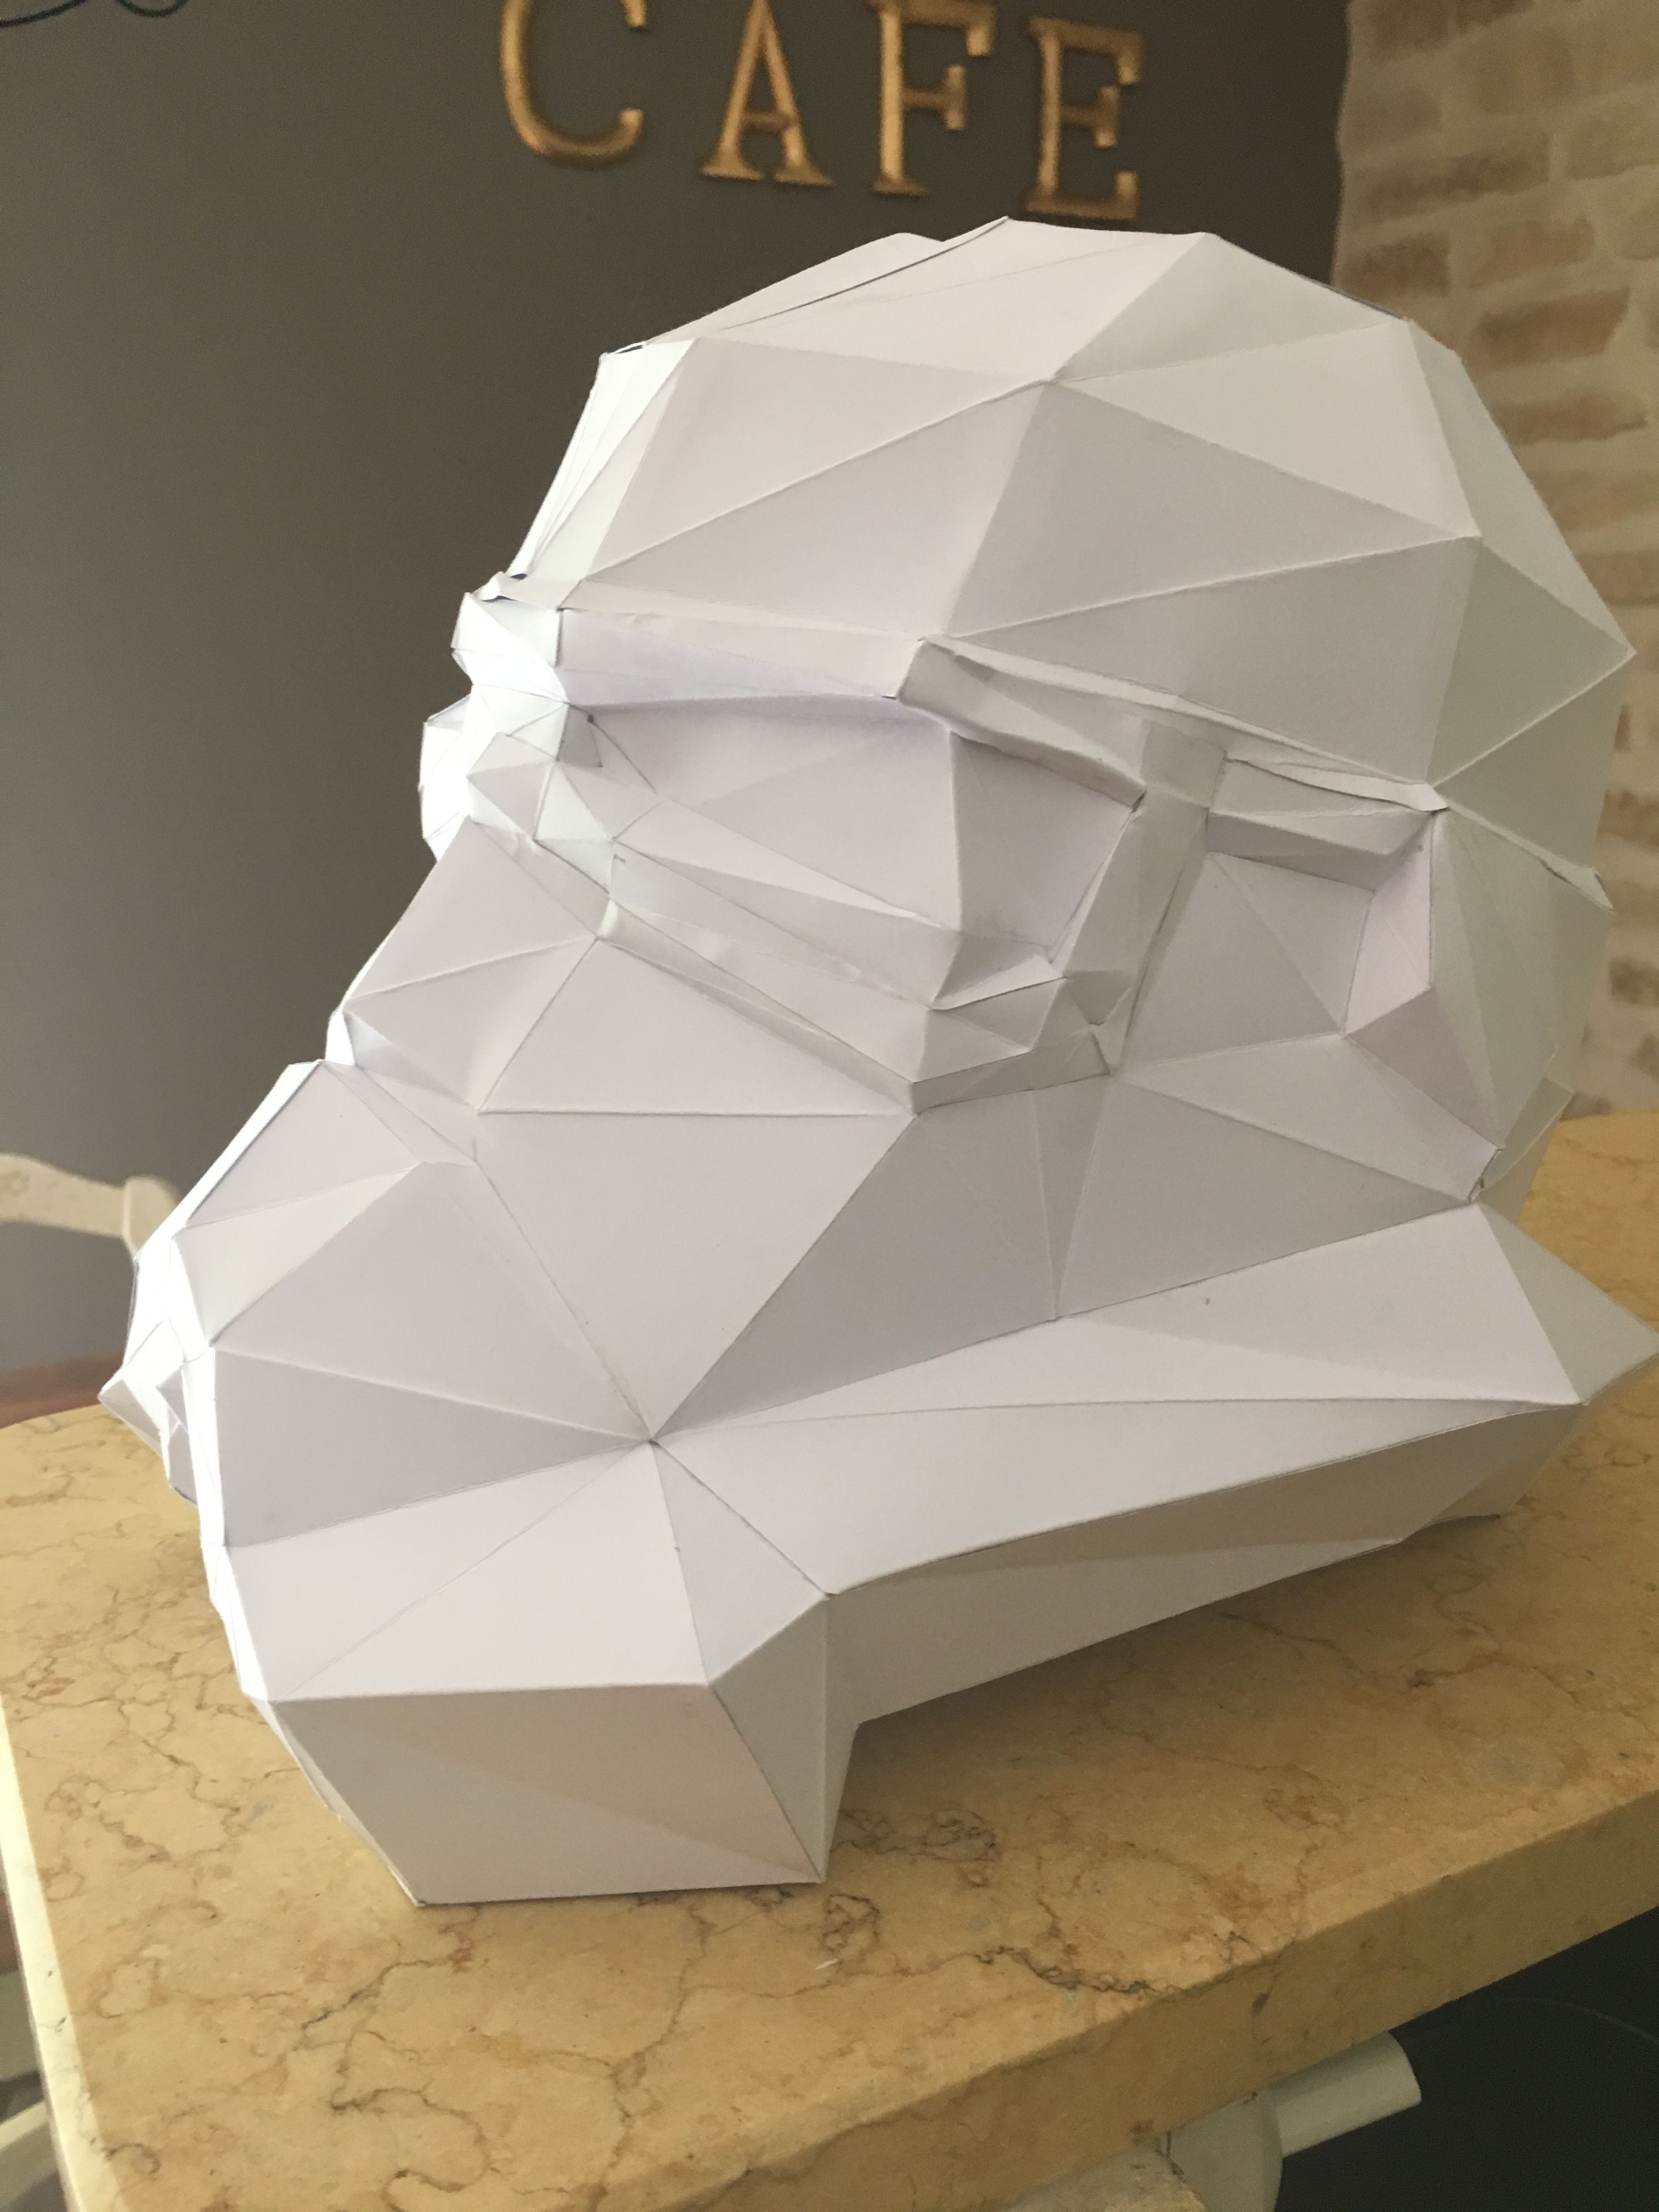 Papercraft Art Stormtrooper Papercraft La Guerre Des étoiles Star Wars